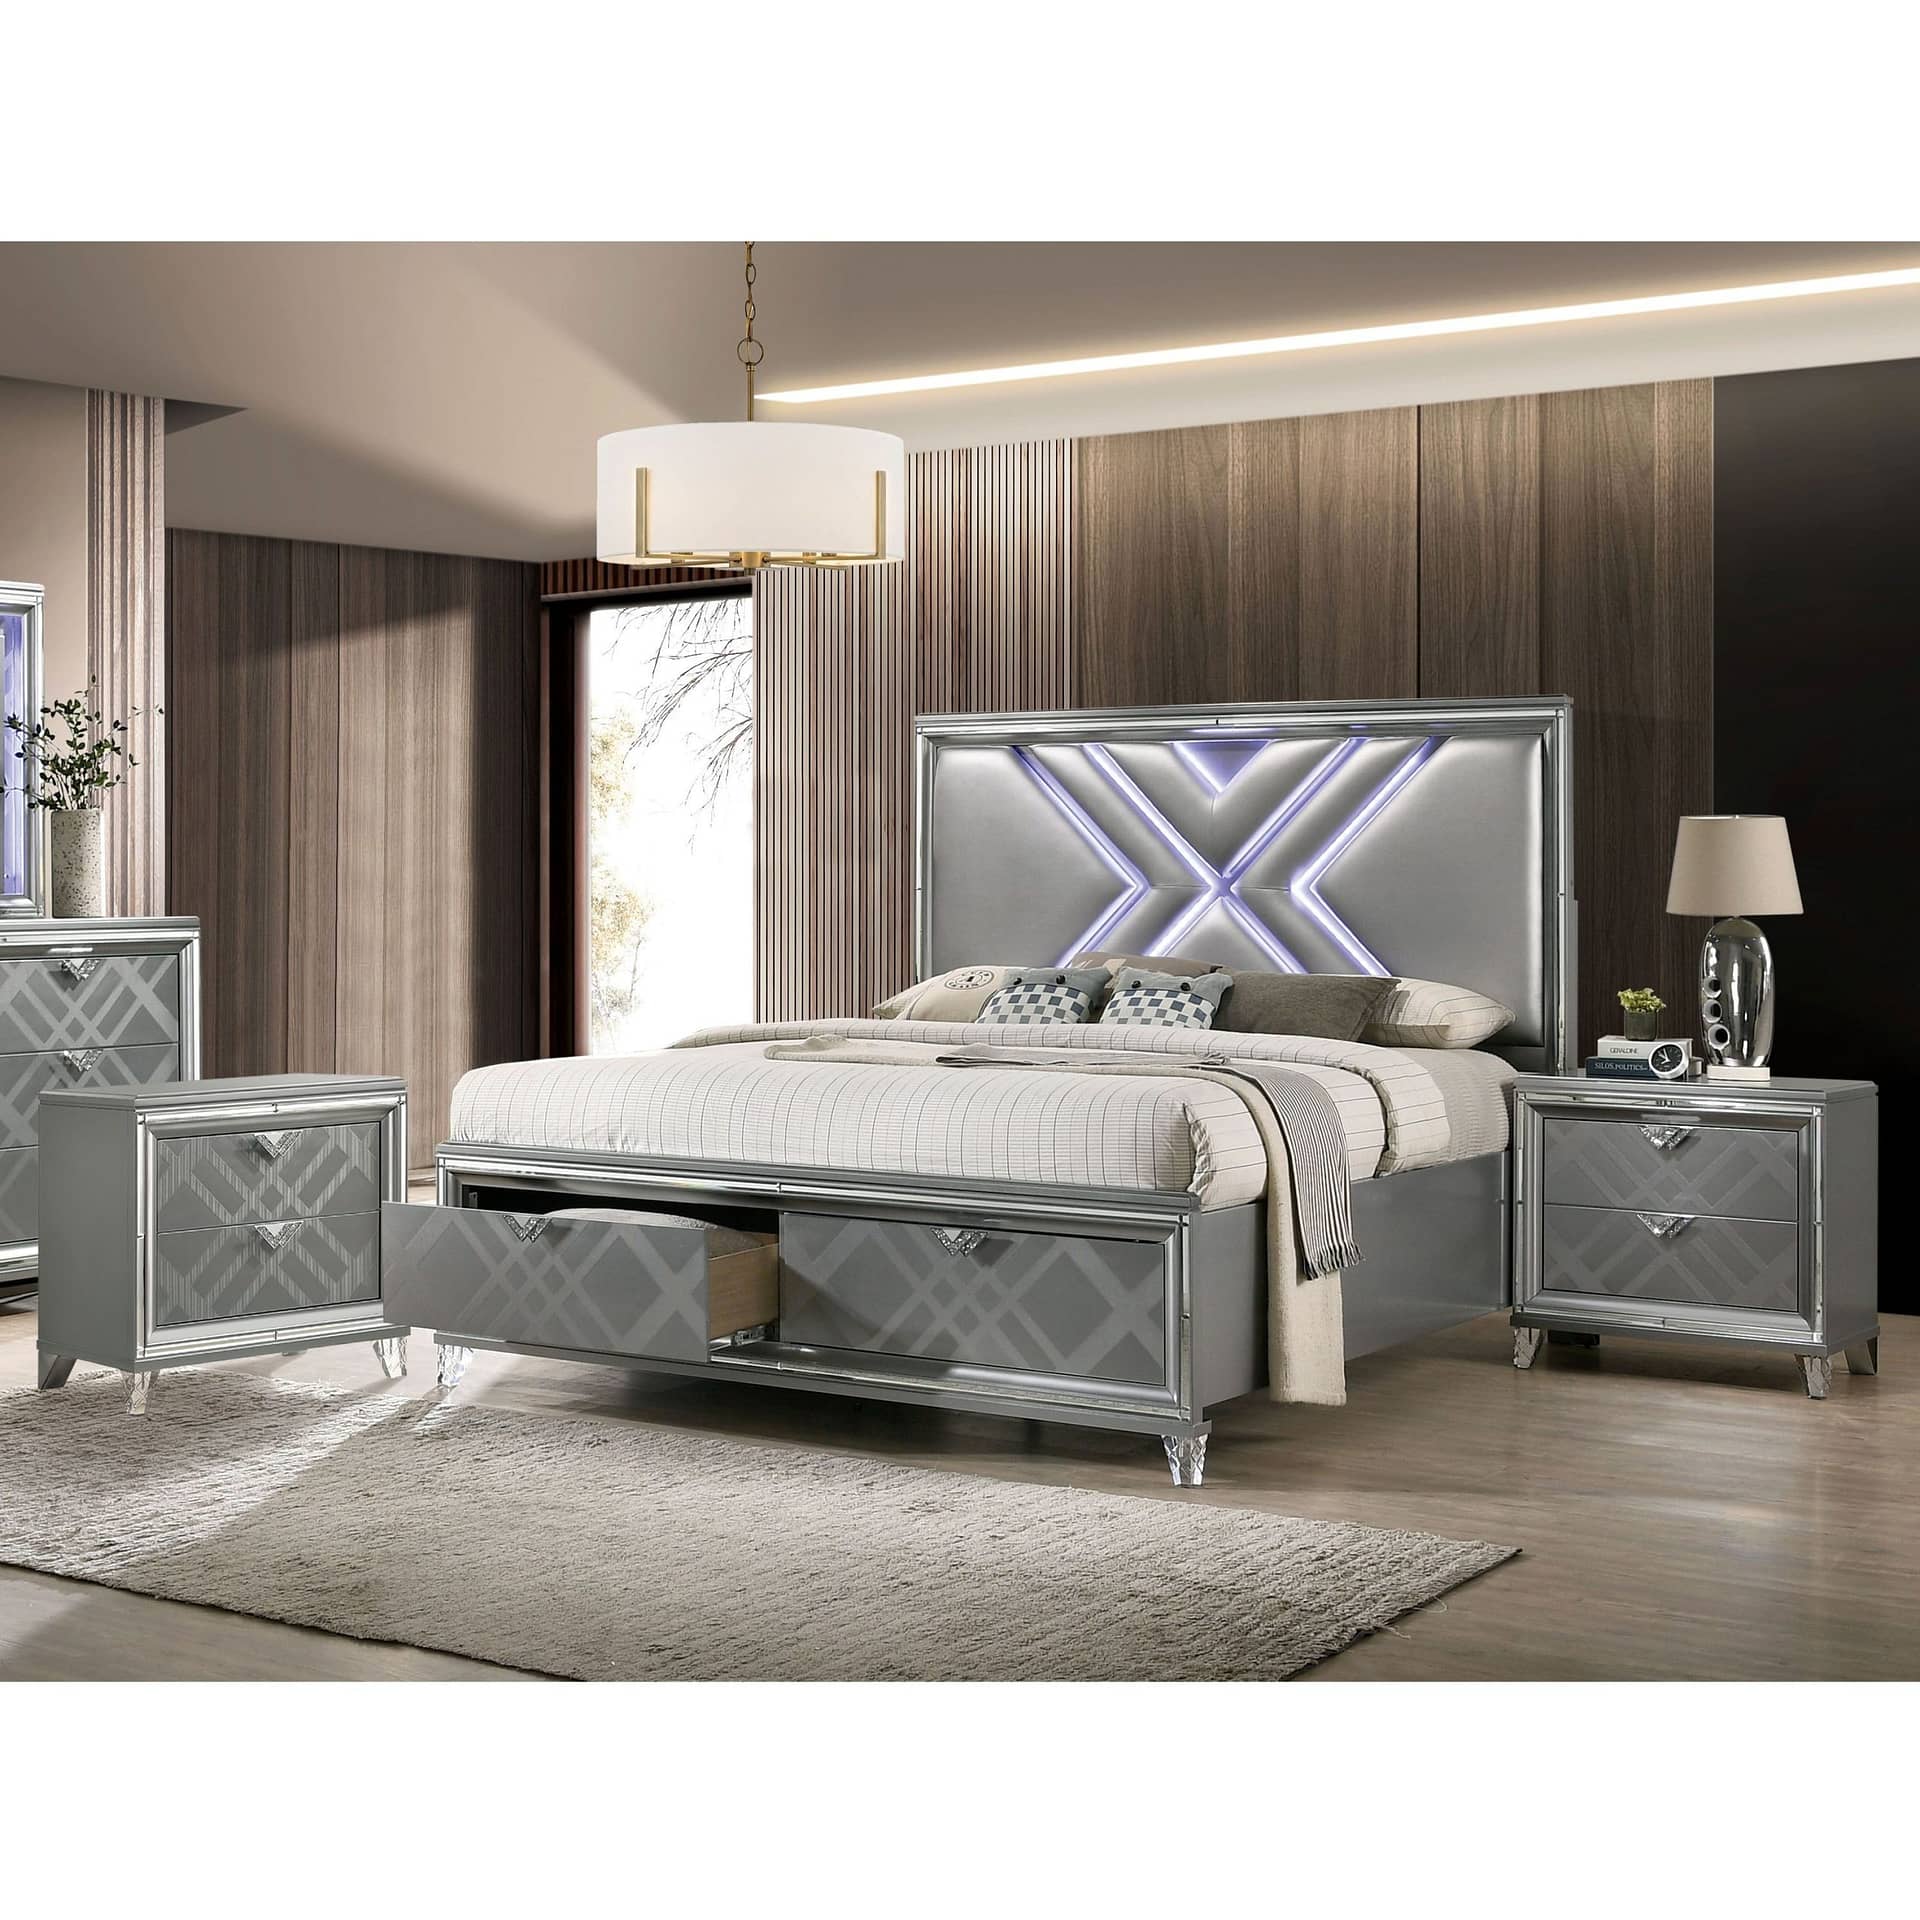 Furniture of America Bel Air 3-piece Bedroom Set with 2 Nightstands